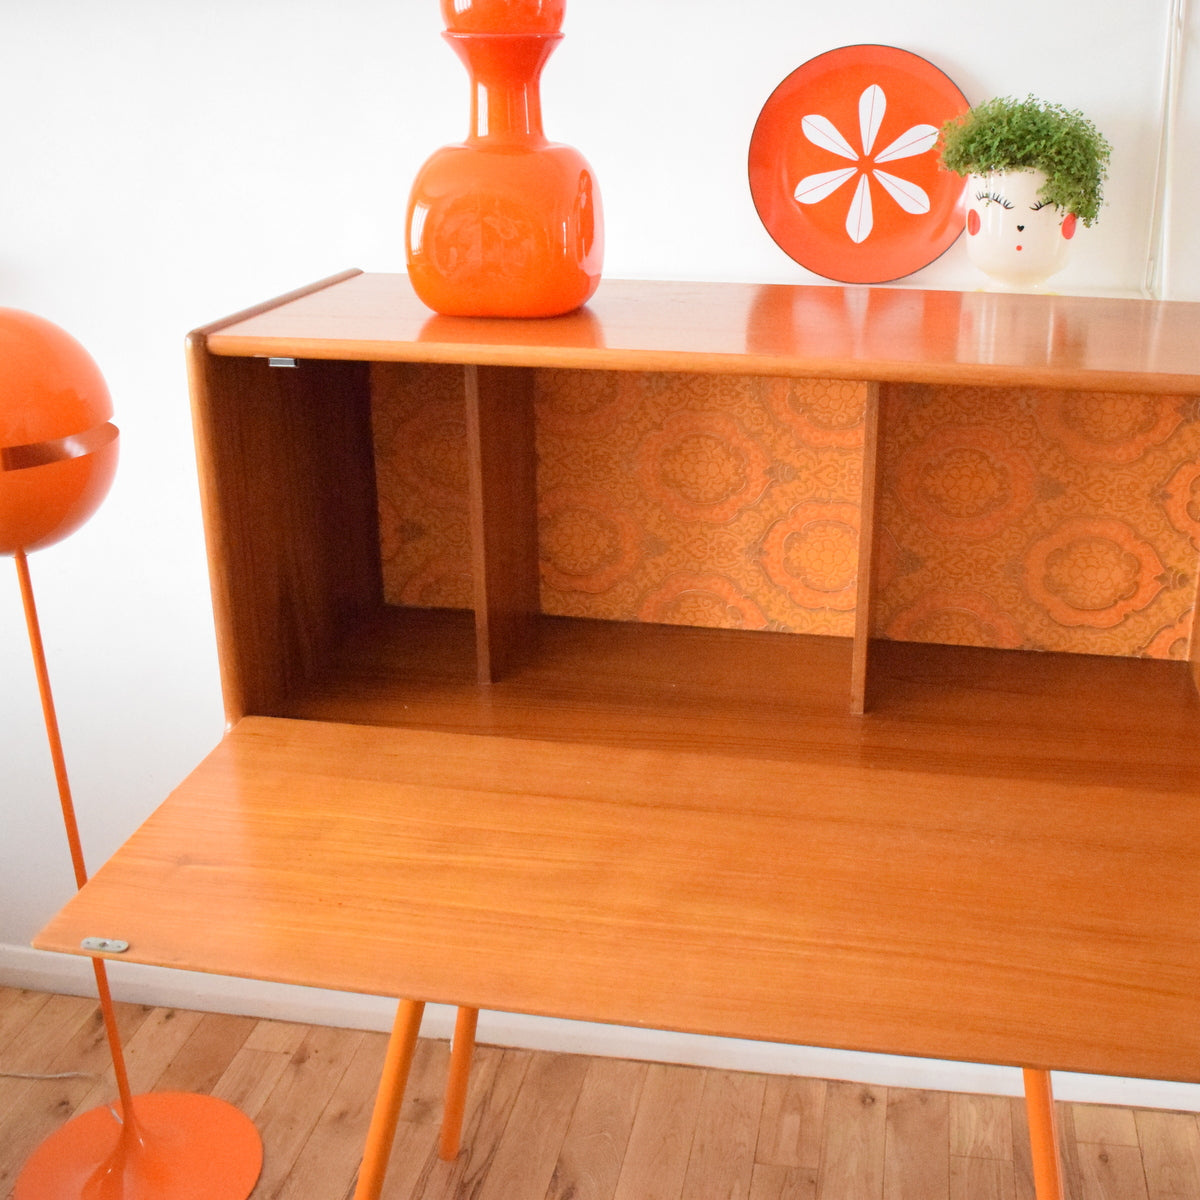 Vintage 1960s Honey Teak Bureau - Lacquered Orange Legs & Wallpaper Backing - Orange